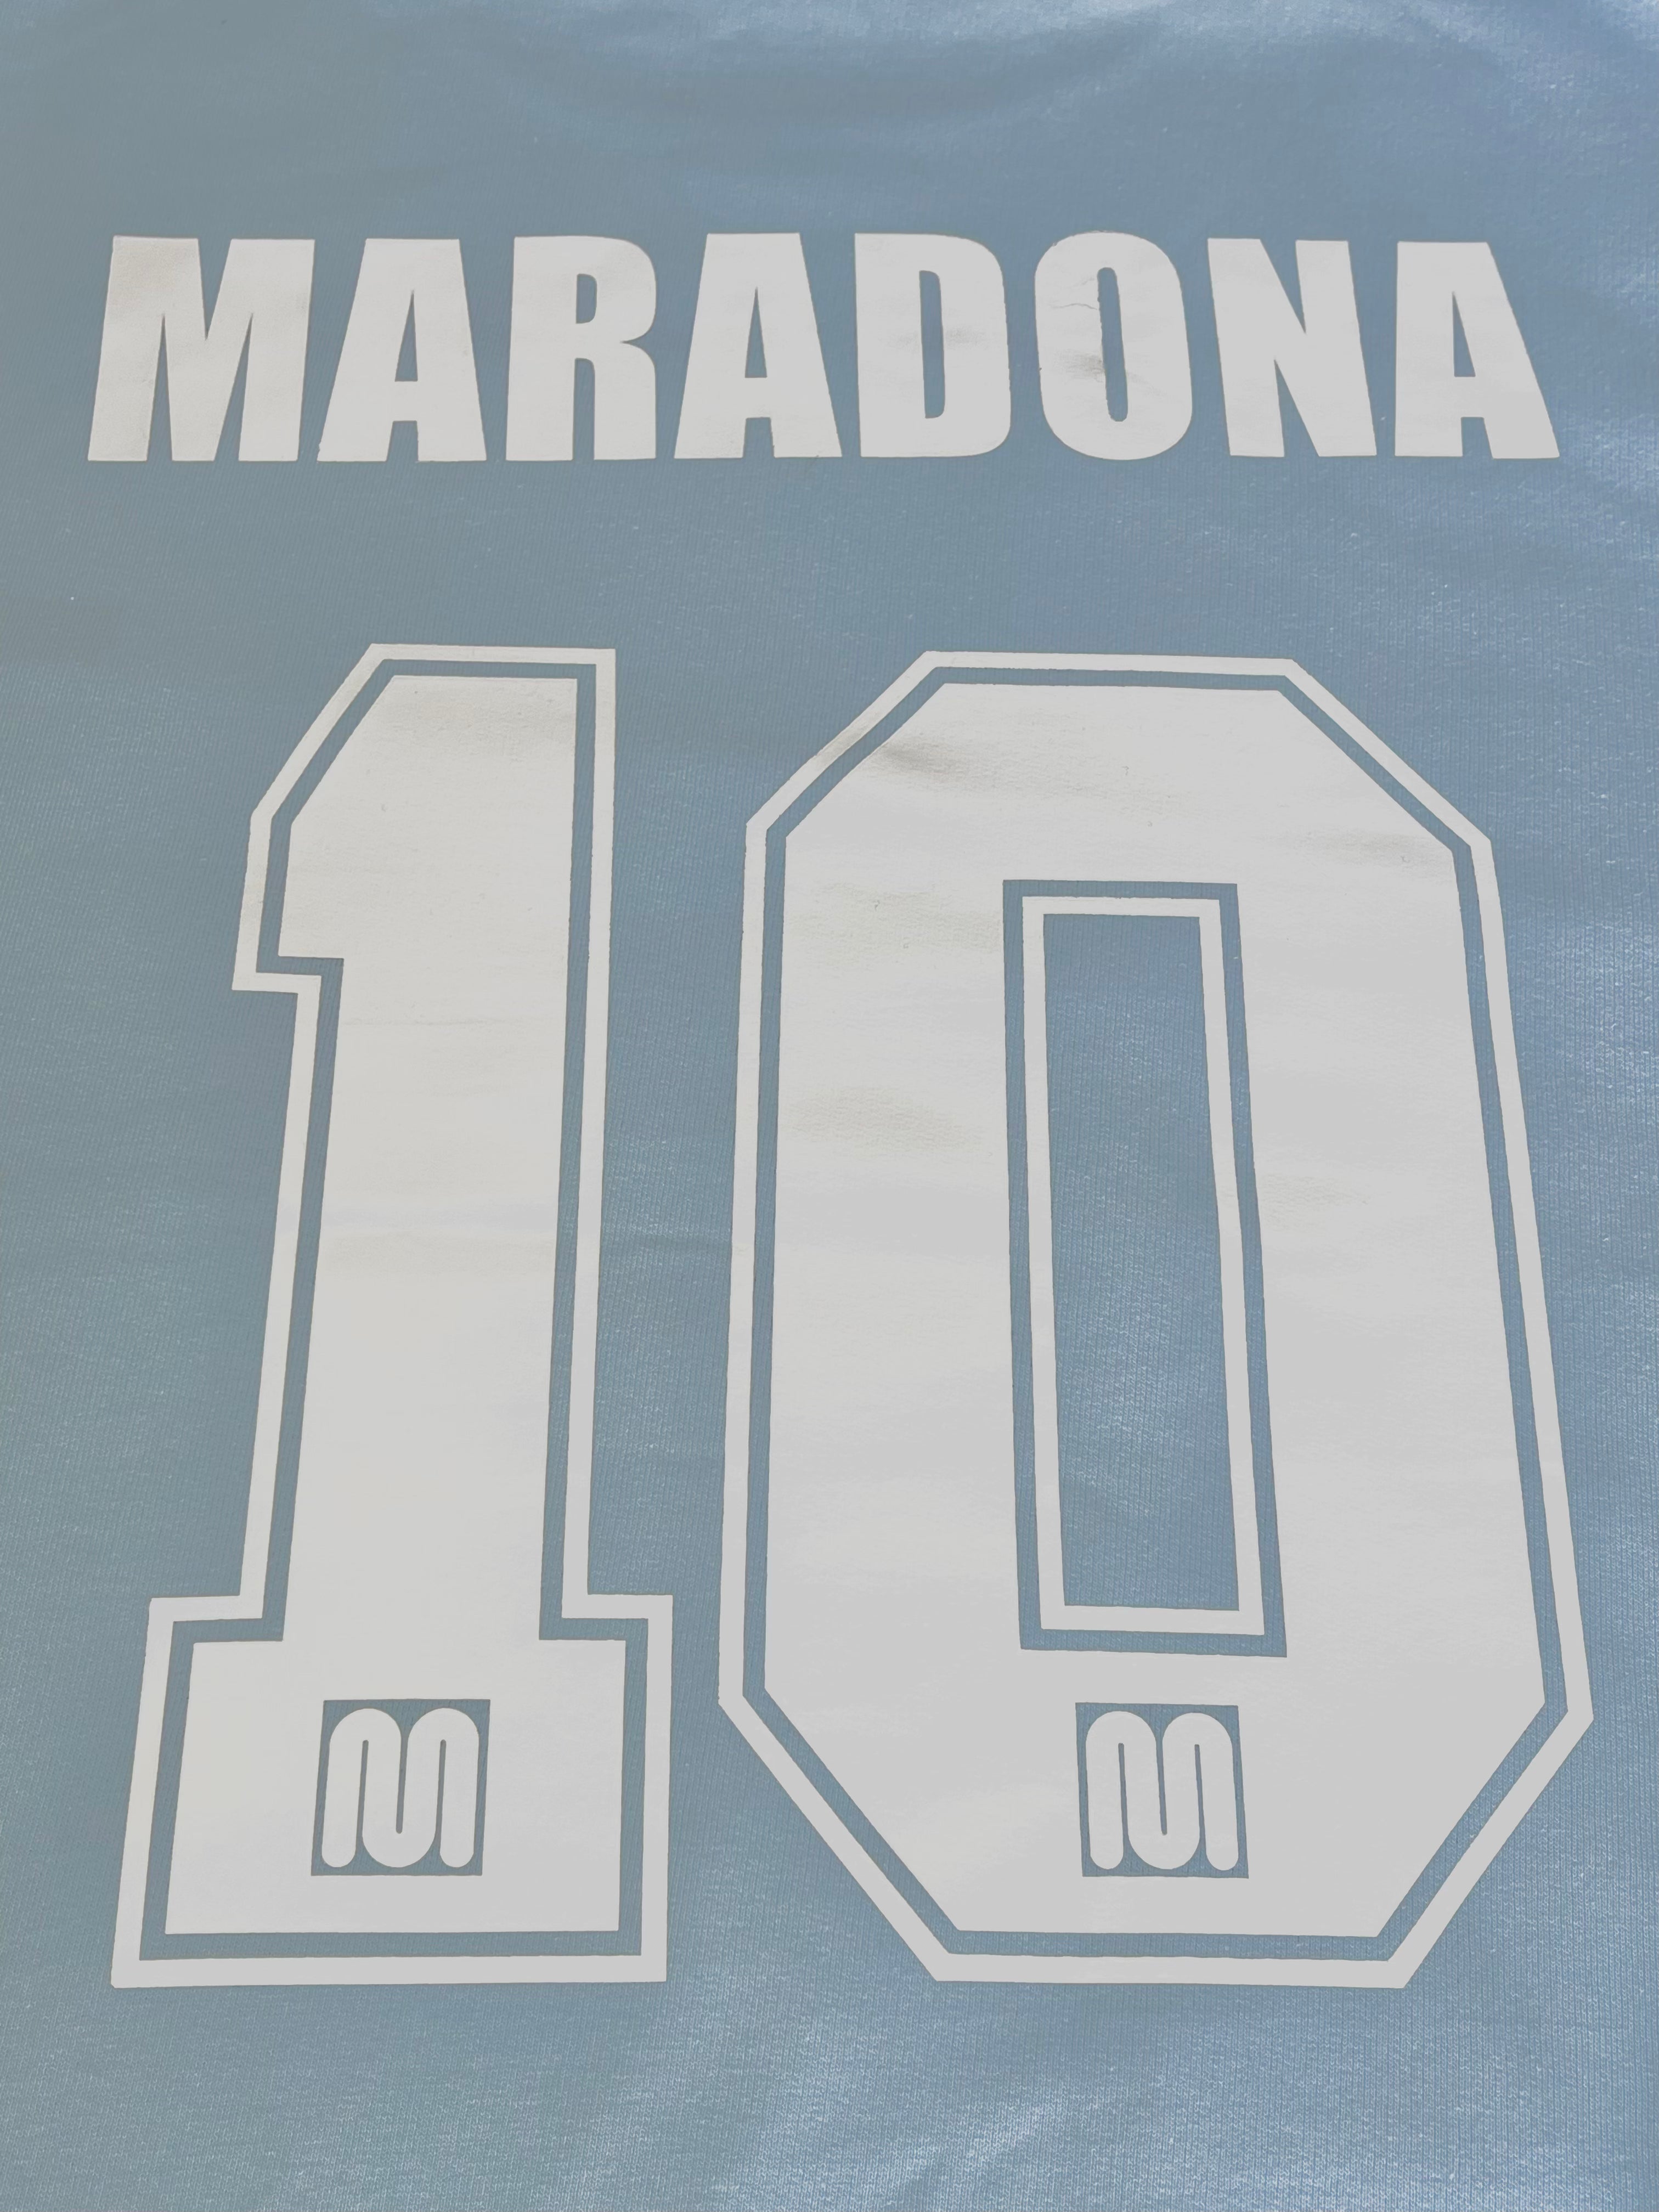 Sweat - Maradona #10